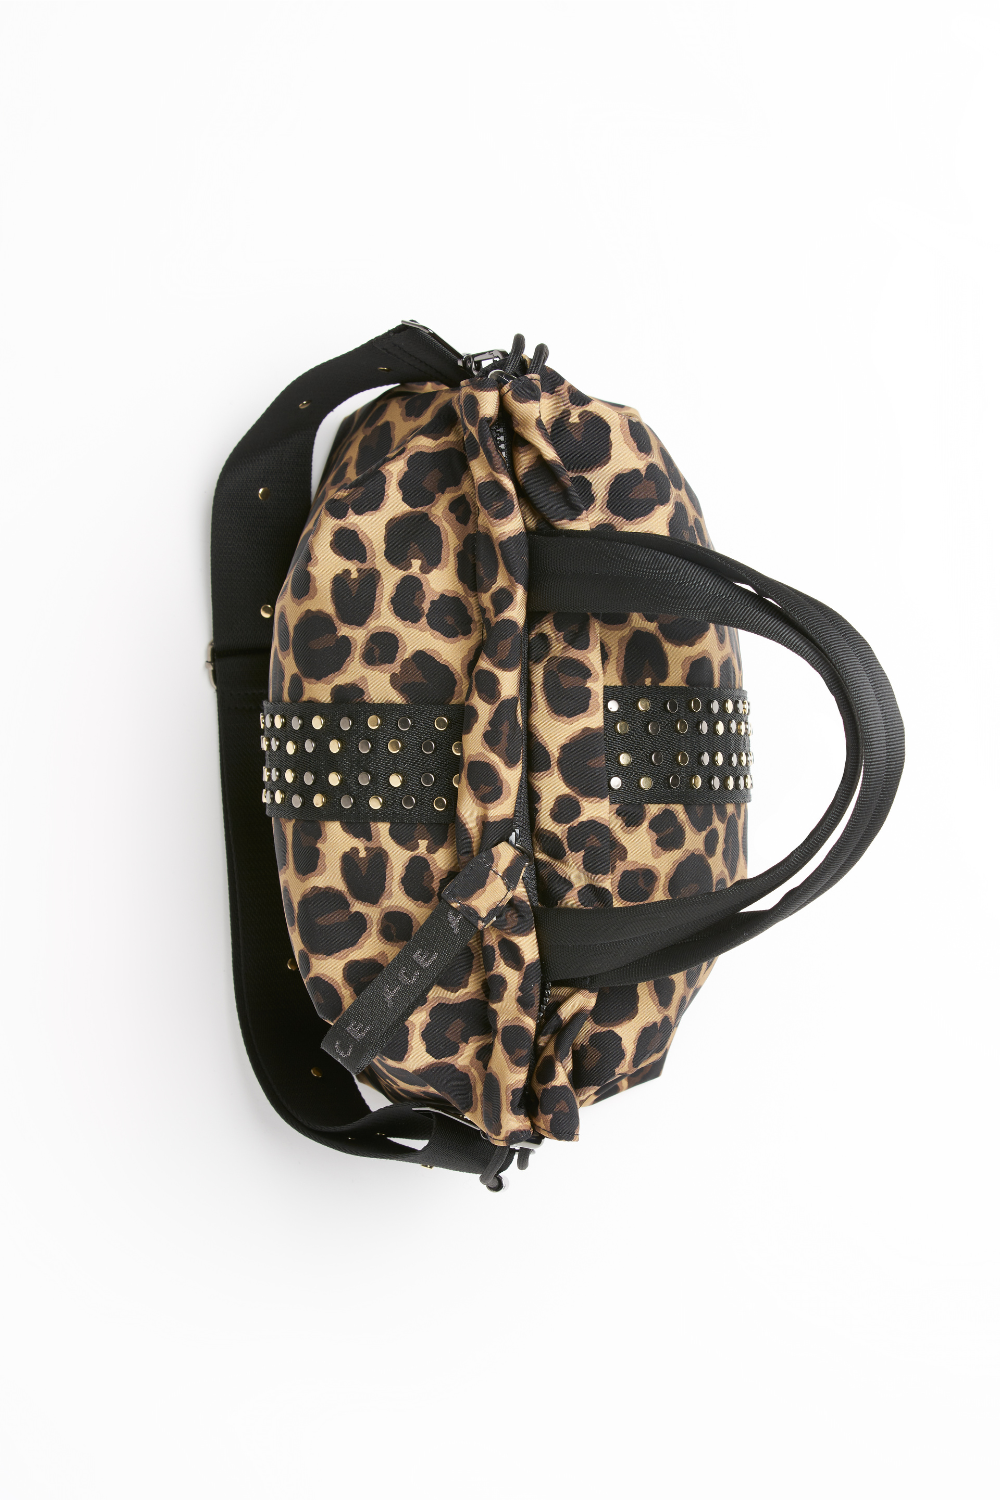 ACE Urban Tote Bag | Leopard